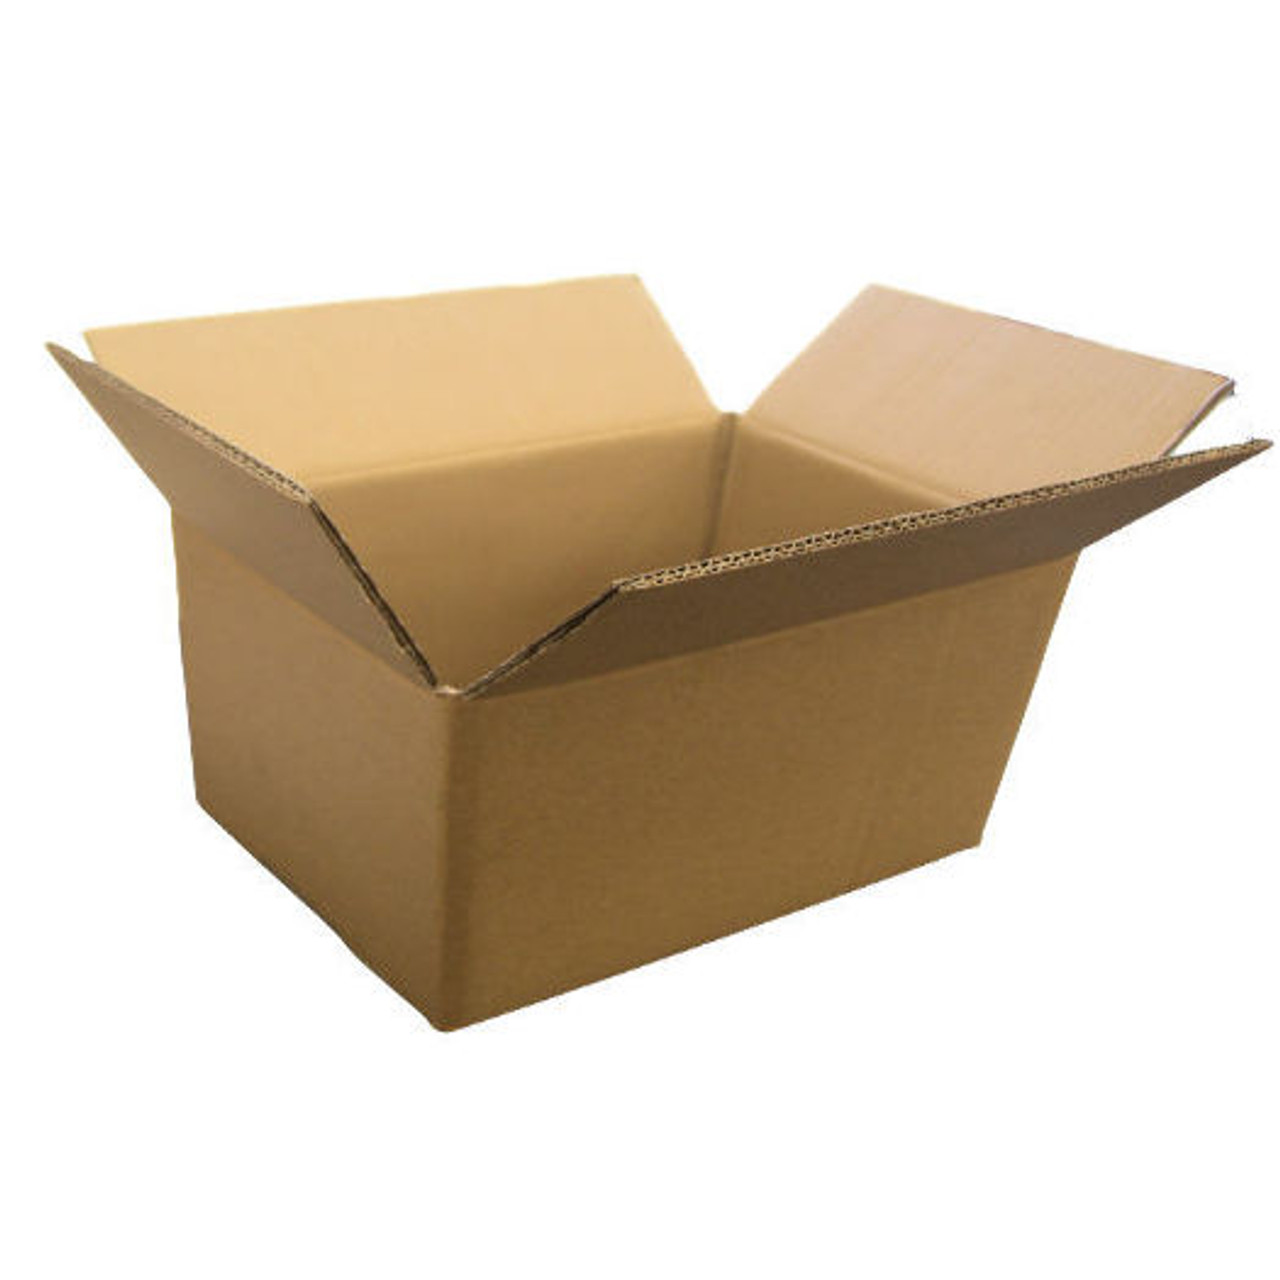 Pack 250 - Heavy Duty Twin Wall Cardboard Boxes 540 x 300 x 380mm